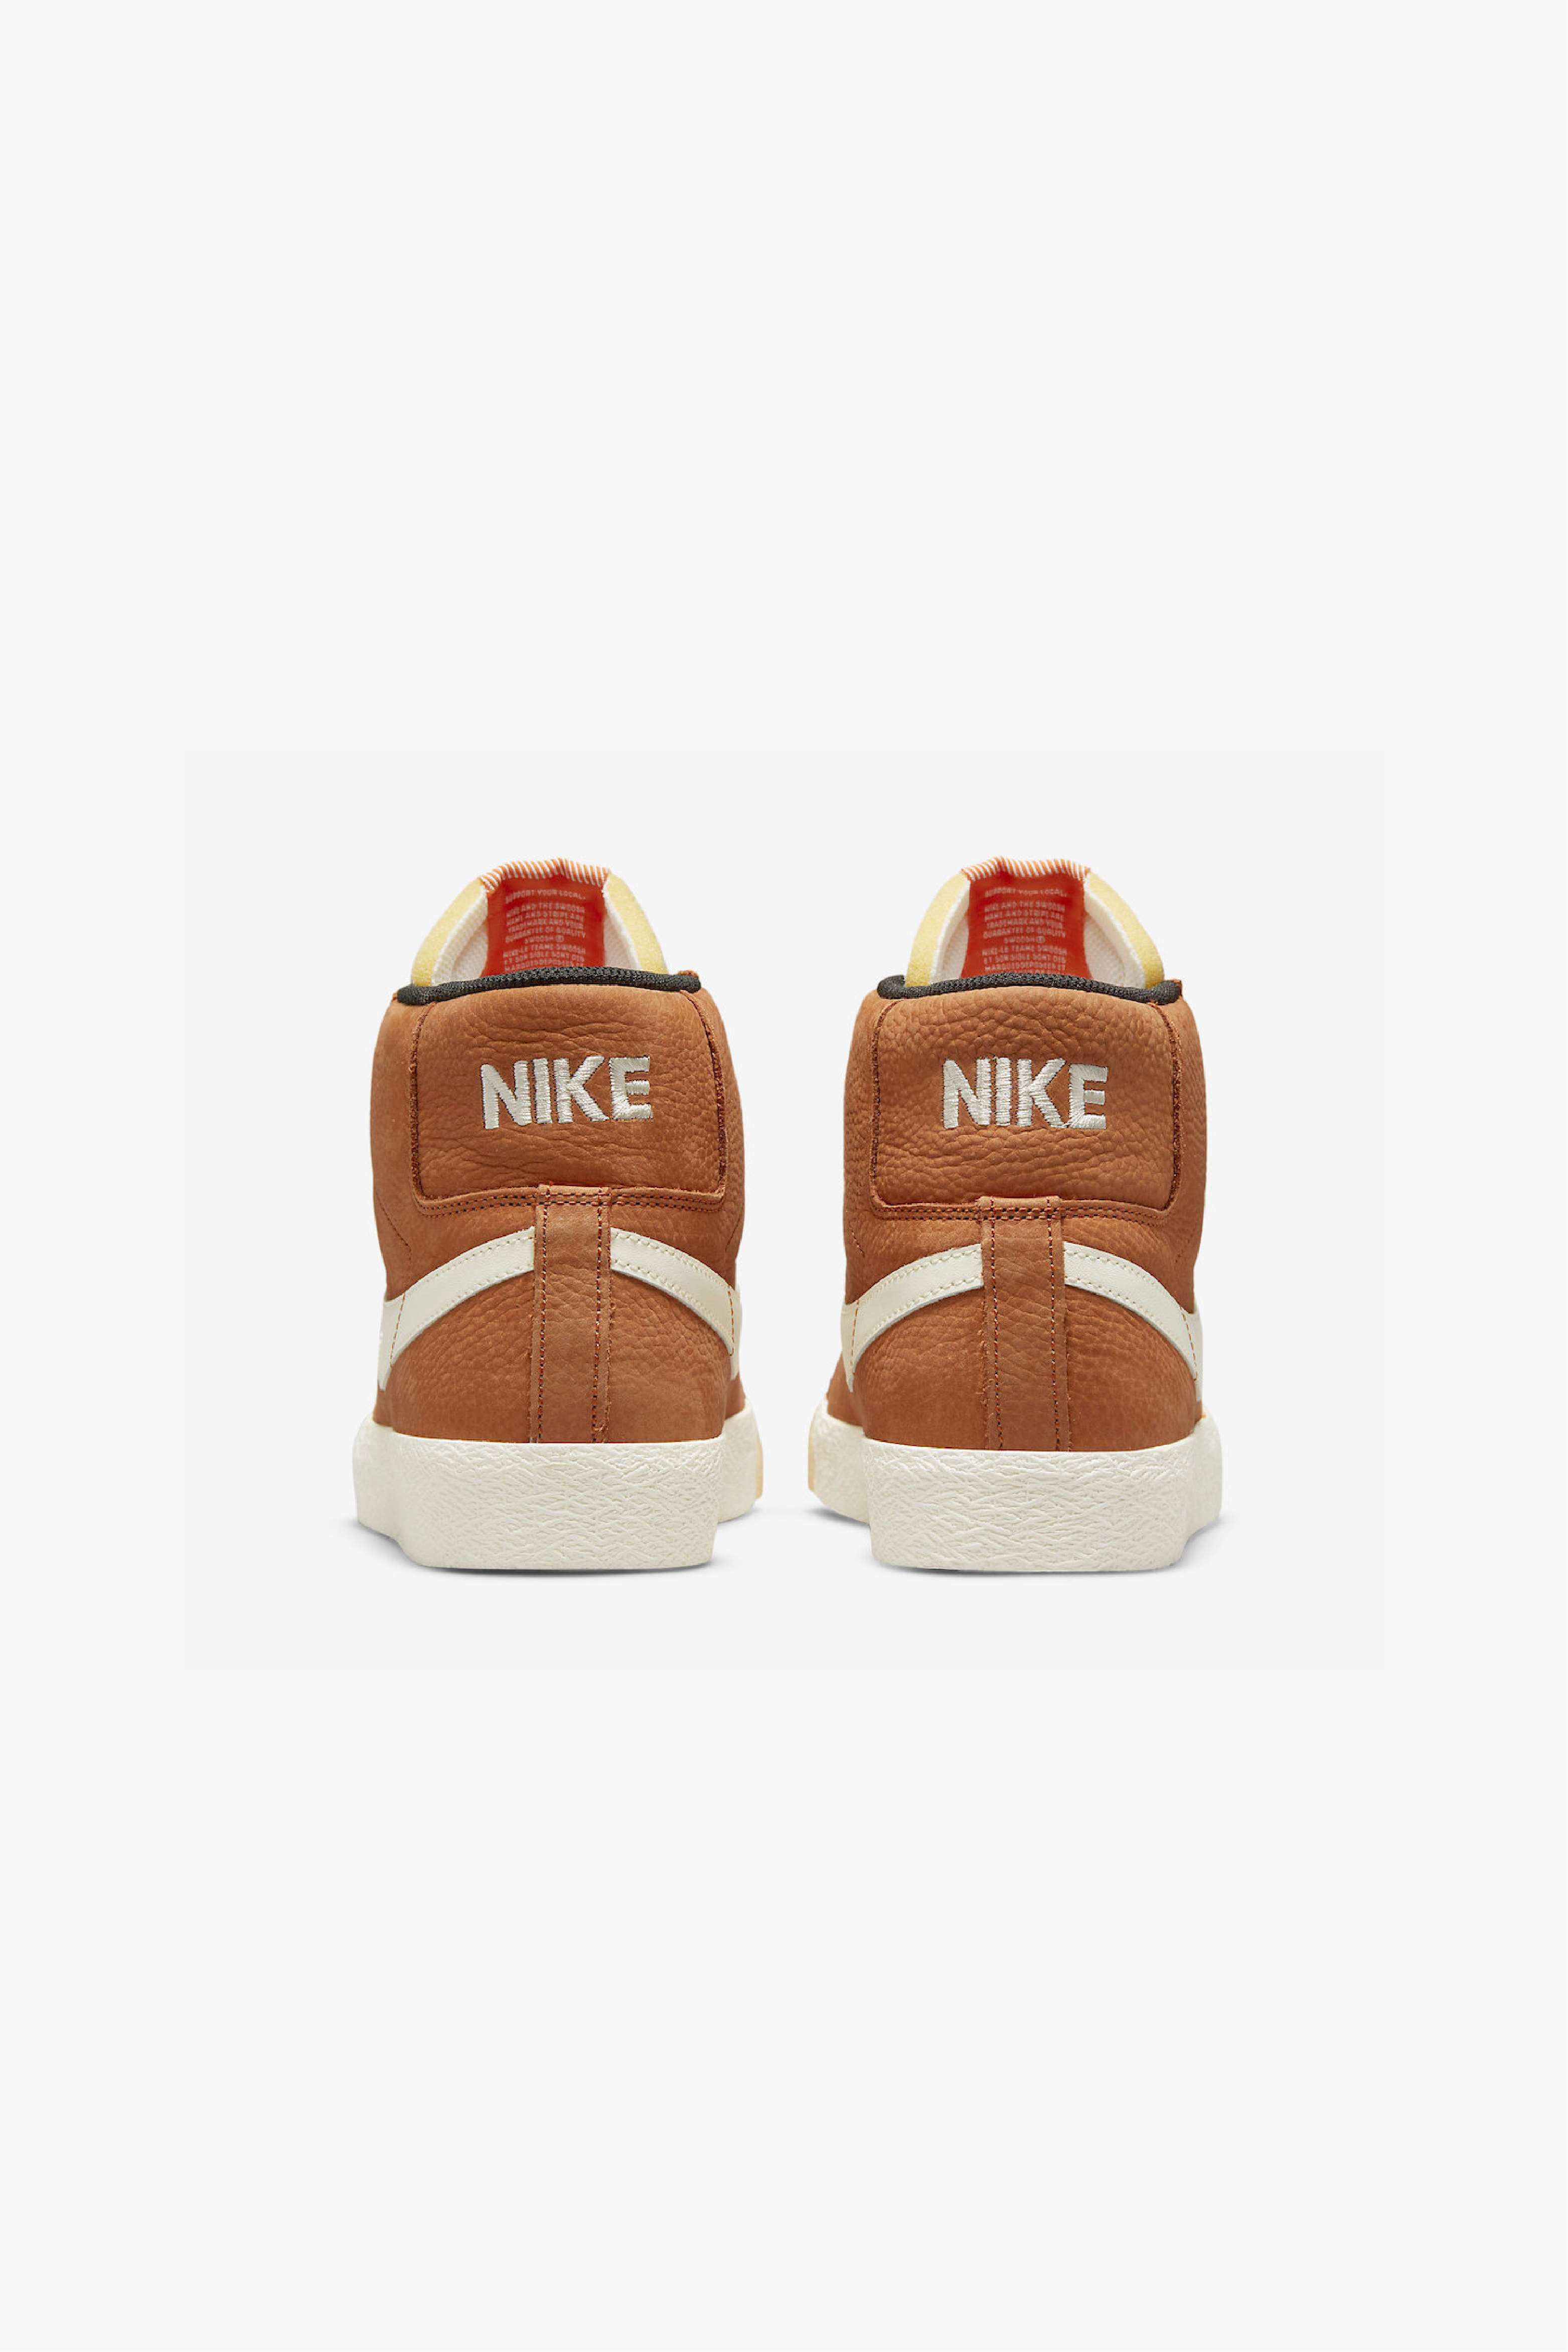 Selectshop FRAME - NIKE SB Nike SB Blazer Mid ISO "Dark Russet" Footwear Dubai